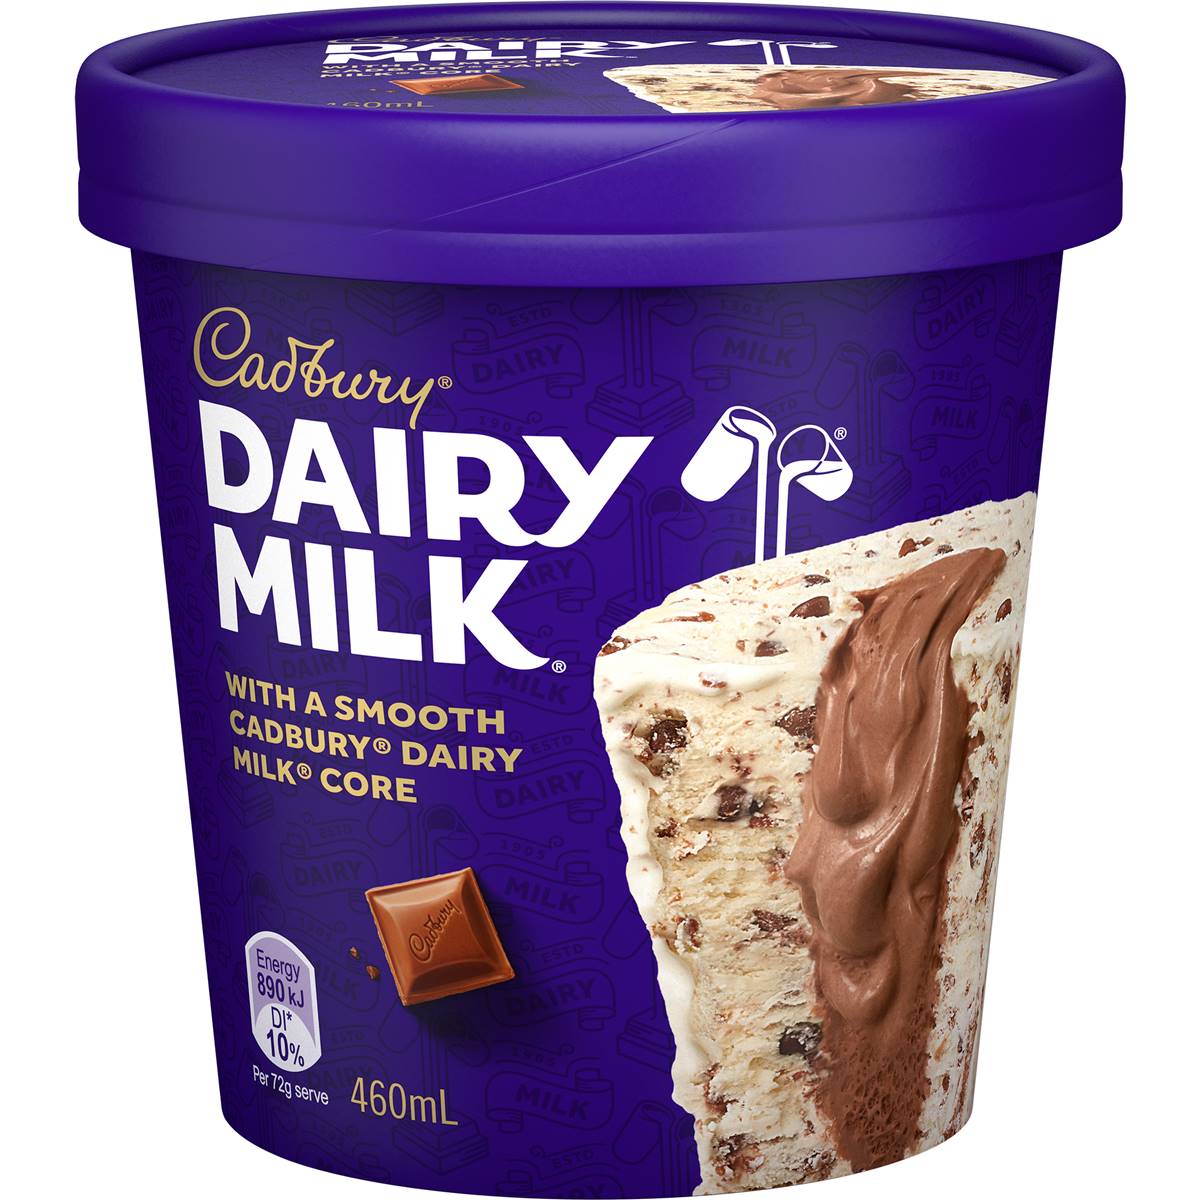 Cadbury Dairy Milk Ice Cream Tub 460ml is not halal